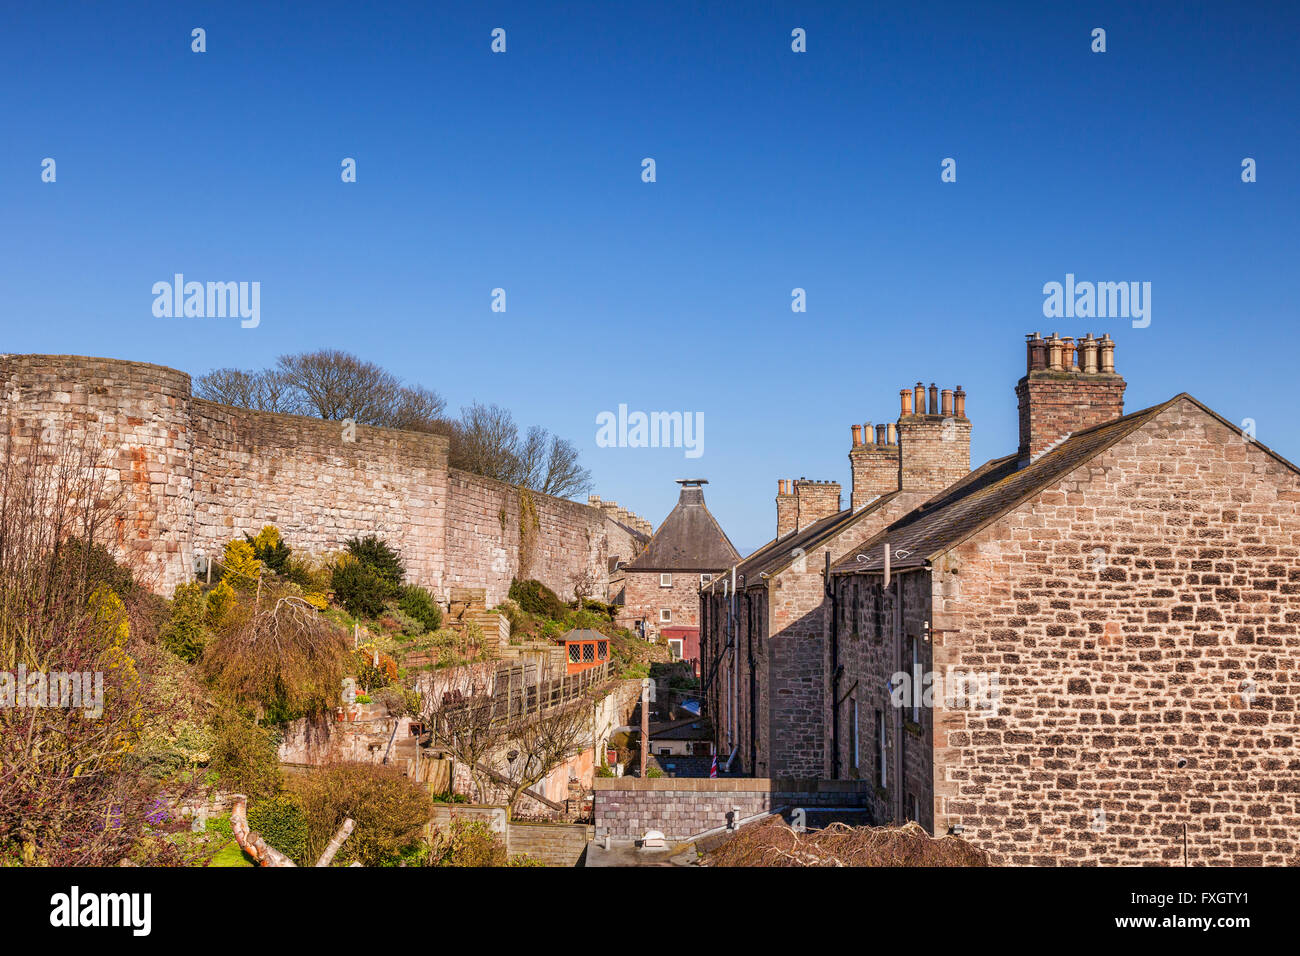 The Town Walls and houses of Berwick-upon-Tweed, Northumberland, England, UK Stock Photo